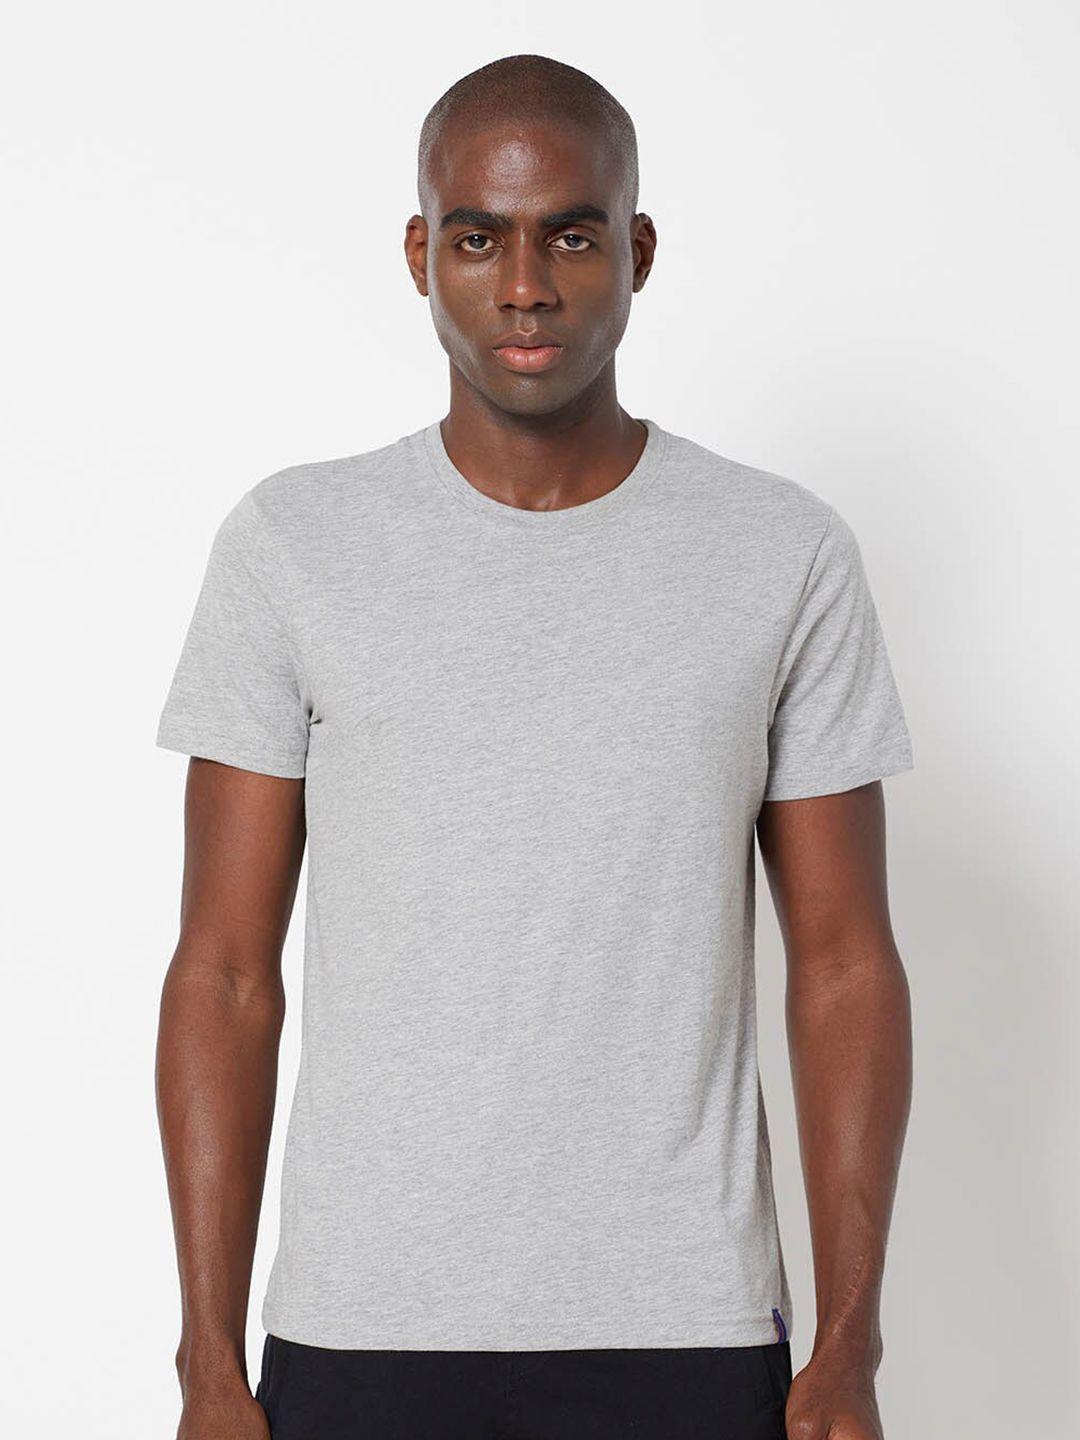 sporto-men-grey-melange-regular-fit-cotton-t-shirt